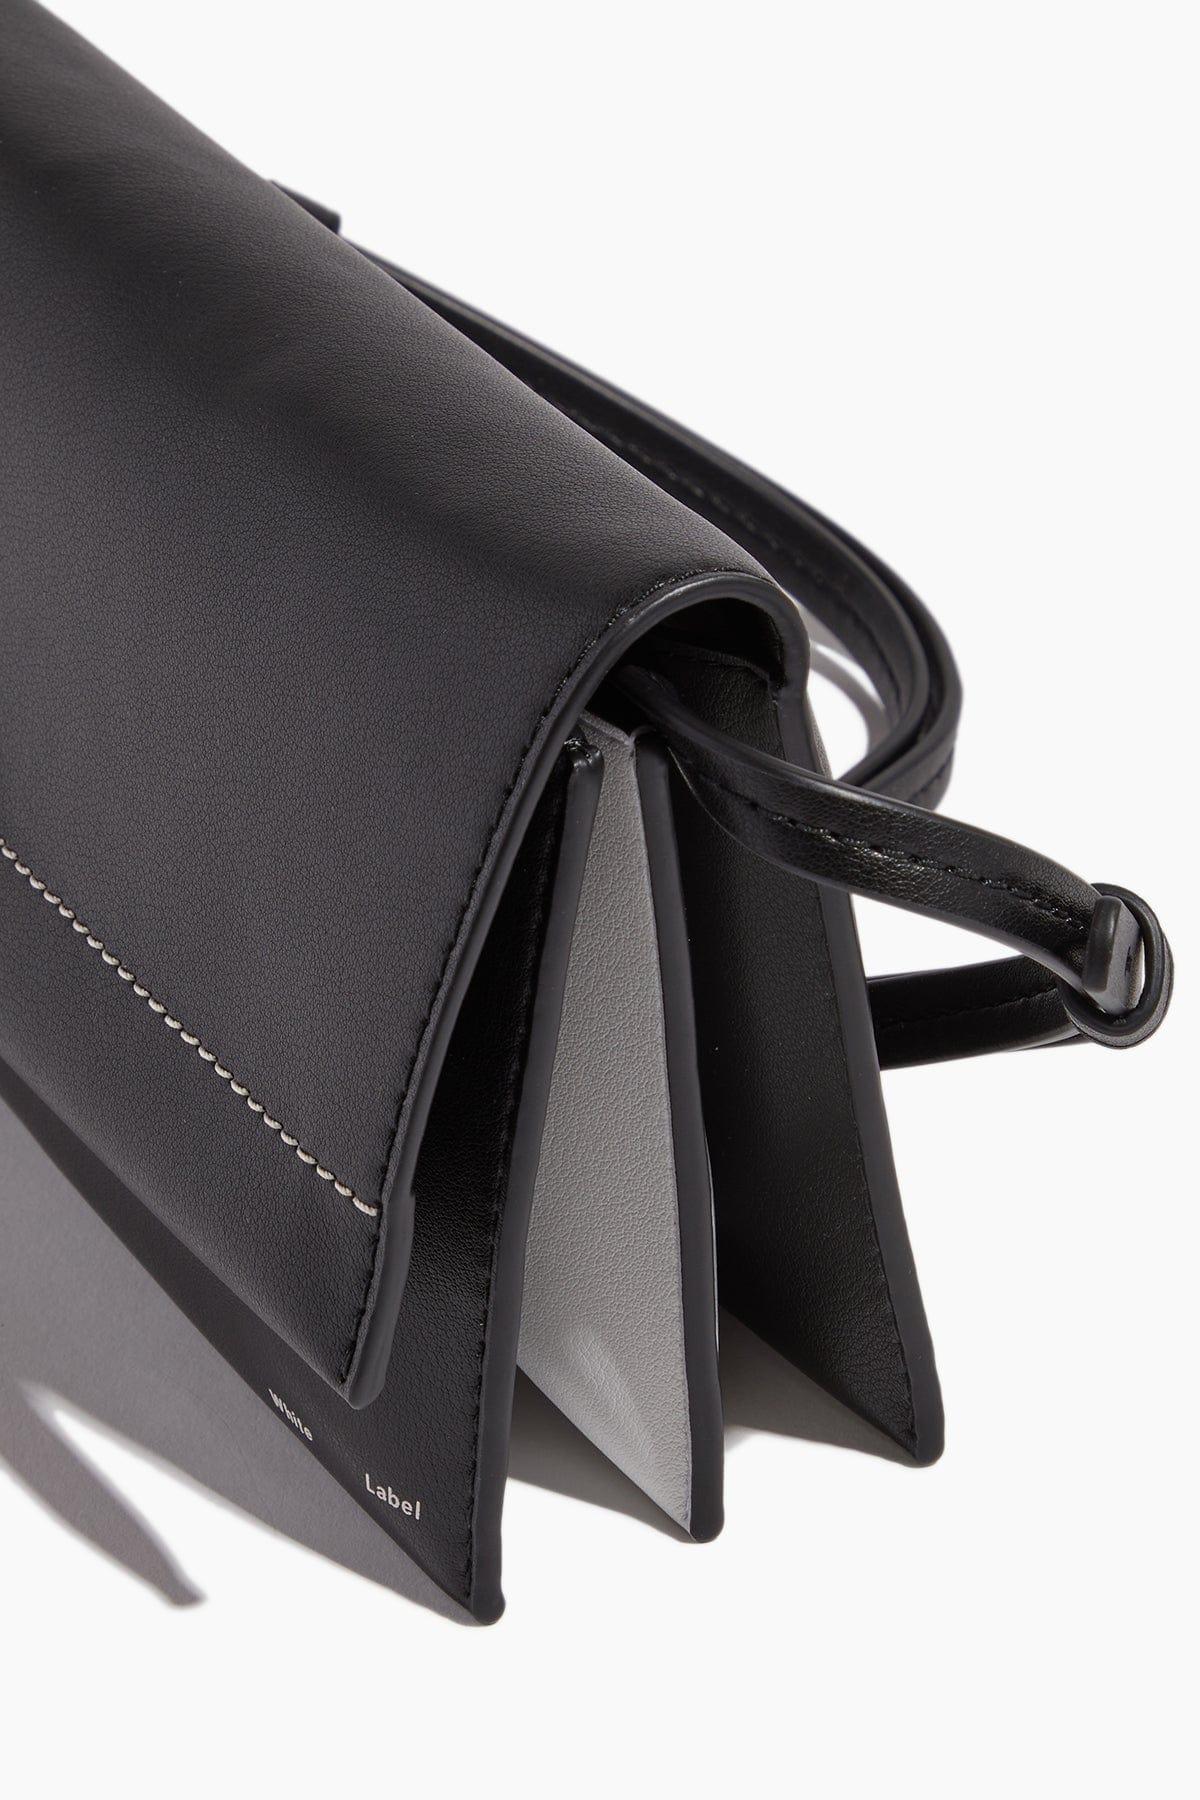 Proenza Schouler, Bags, Proenza Schouler Ps Mini Crossbody Bag Light  Taupe Leather Handbag